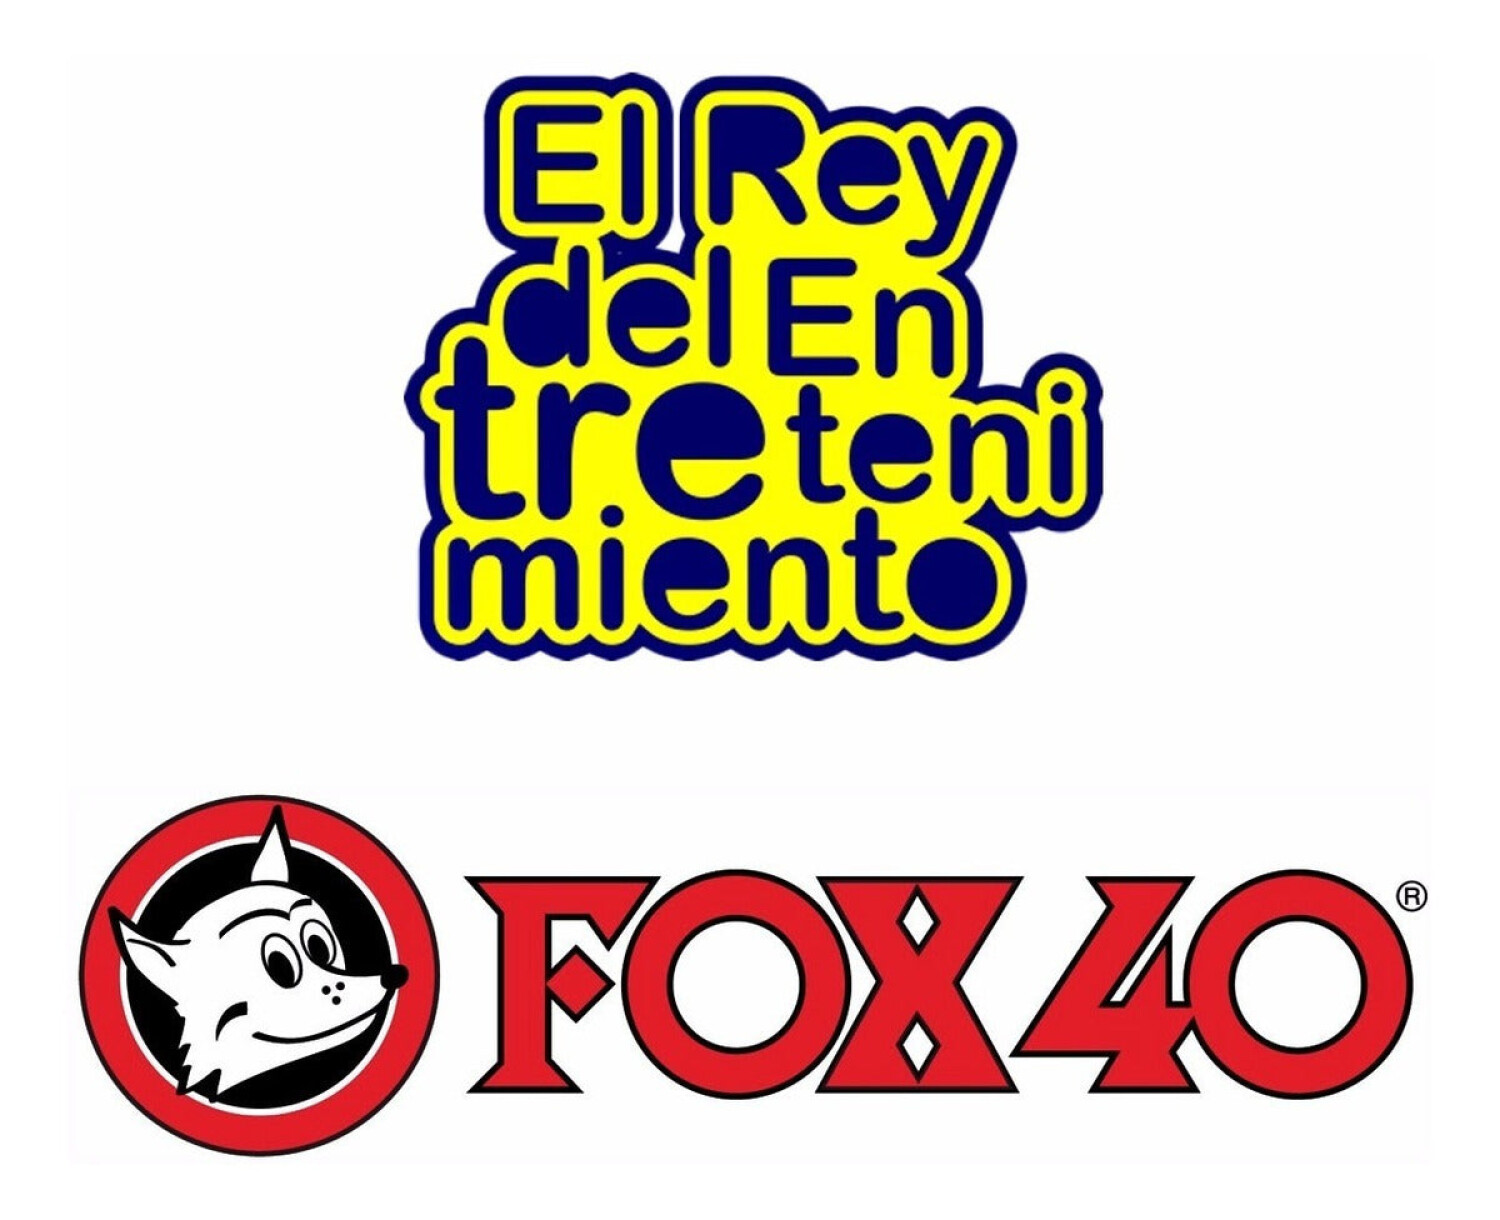 Silbato De Arbitro Plastico Profesional Fox 40 Referee Cuota